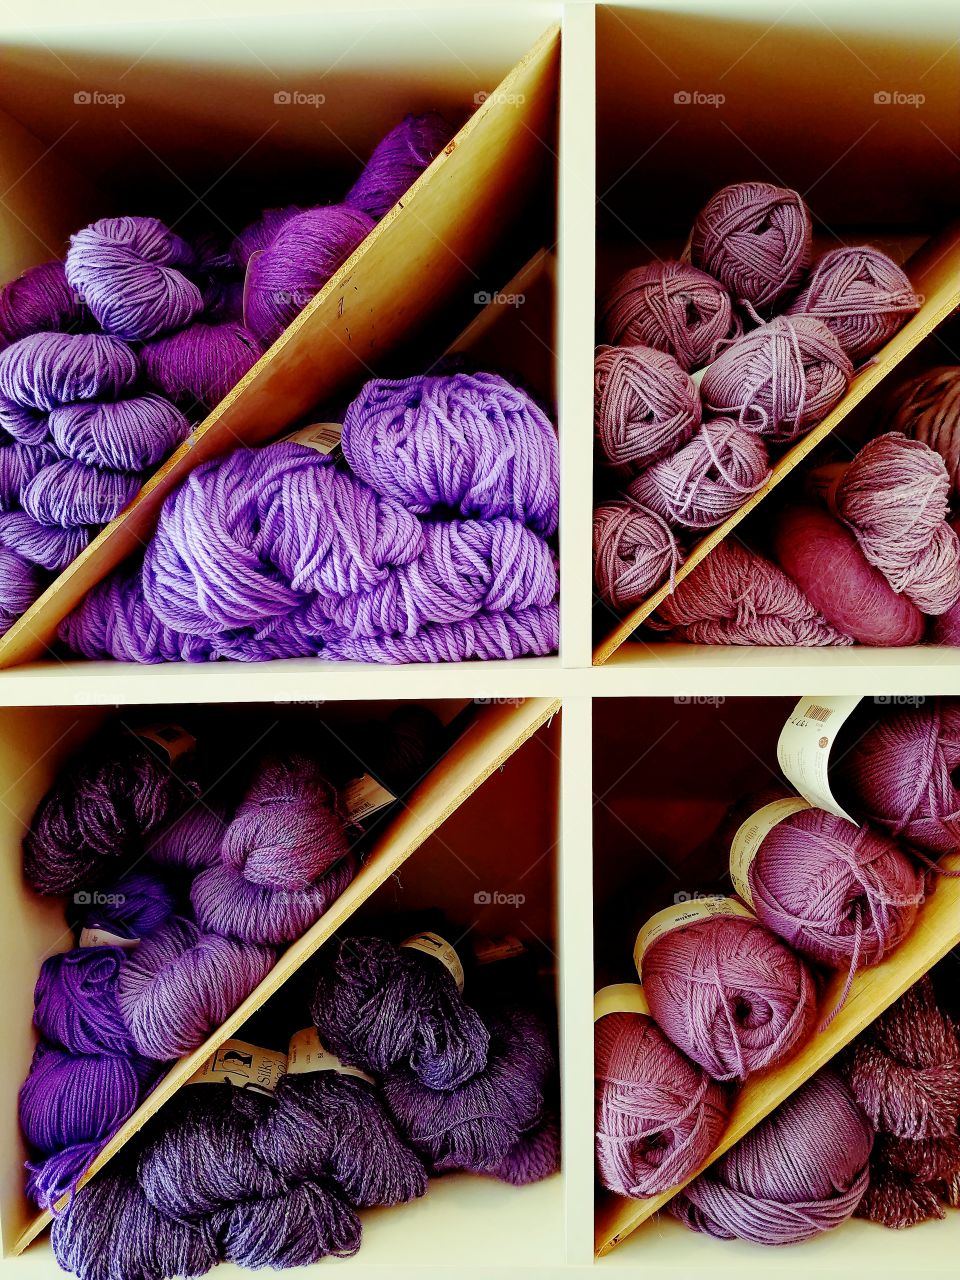 Cotton yarn in the shelf